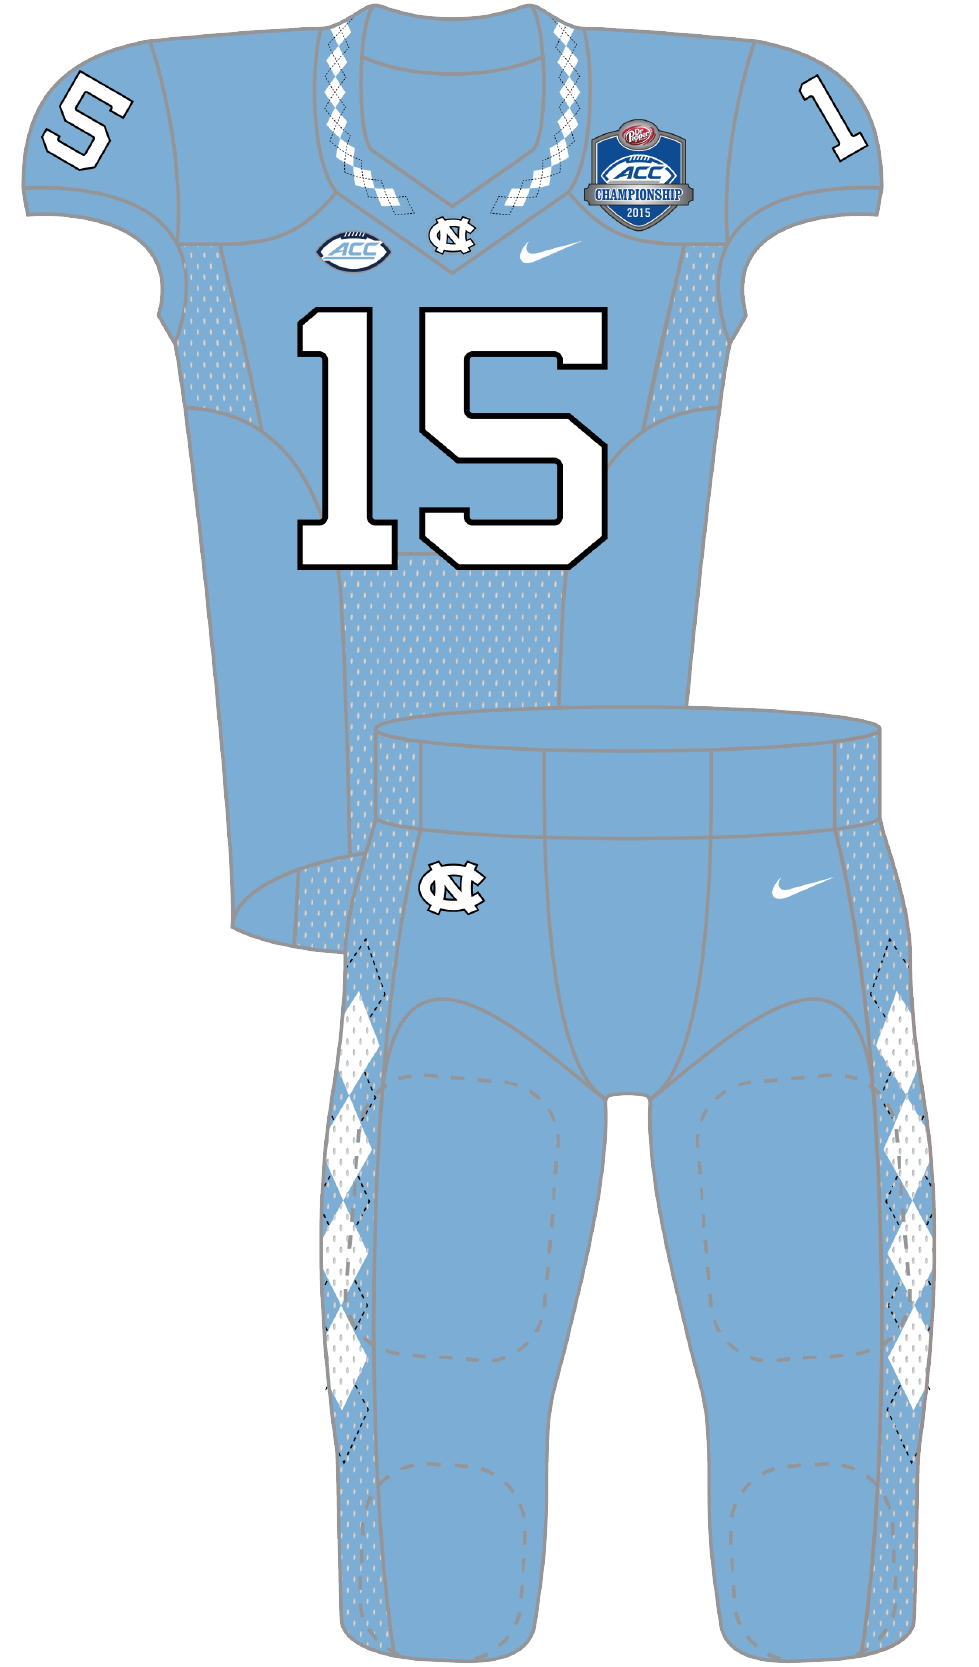 North Carolina 2015 Blue Uniform